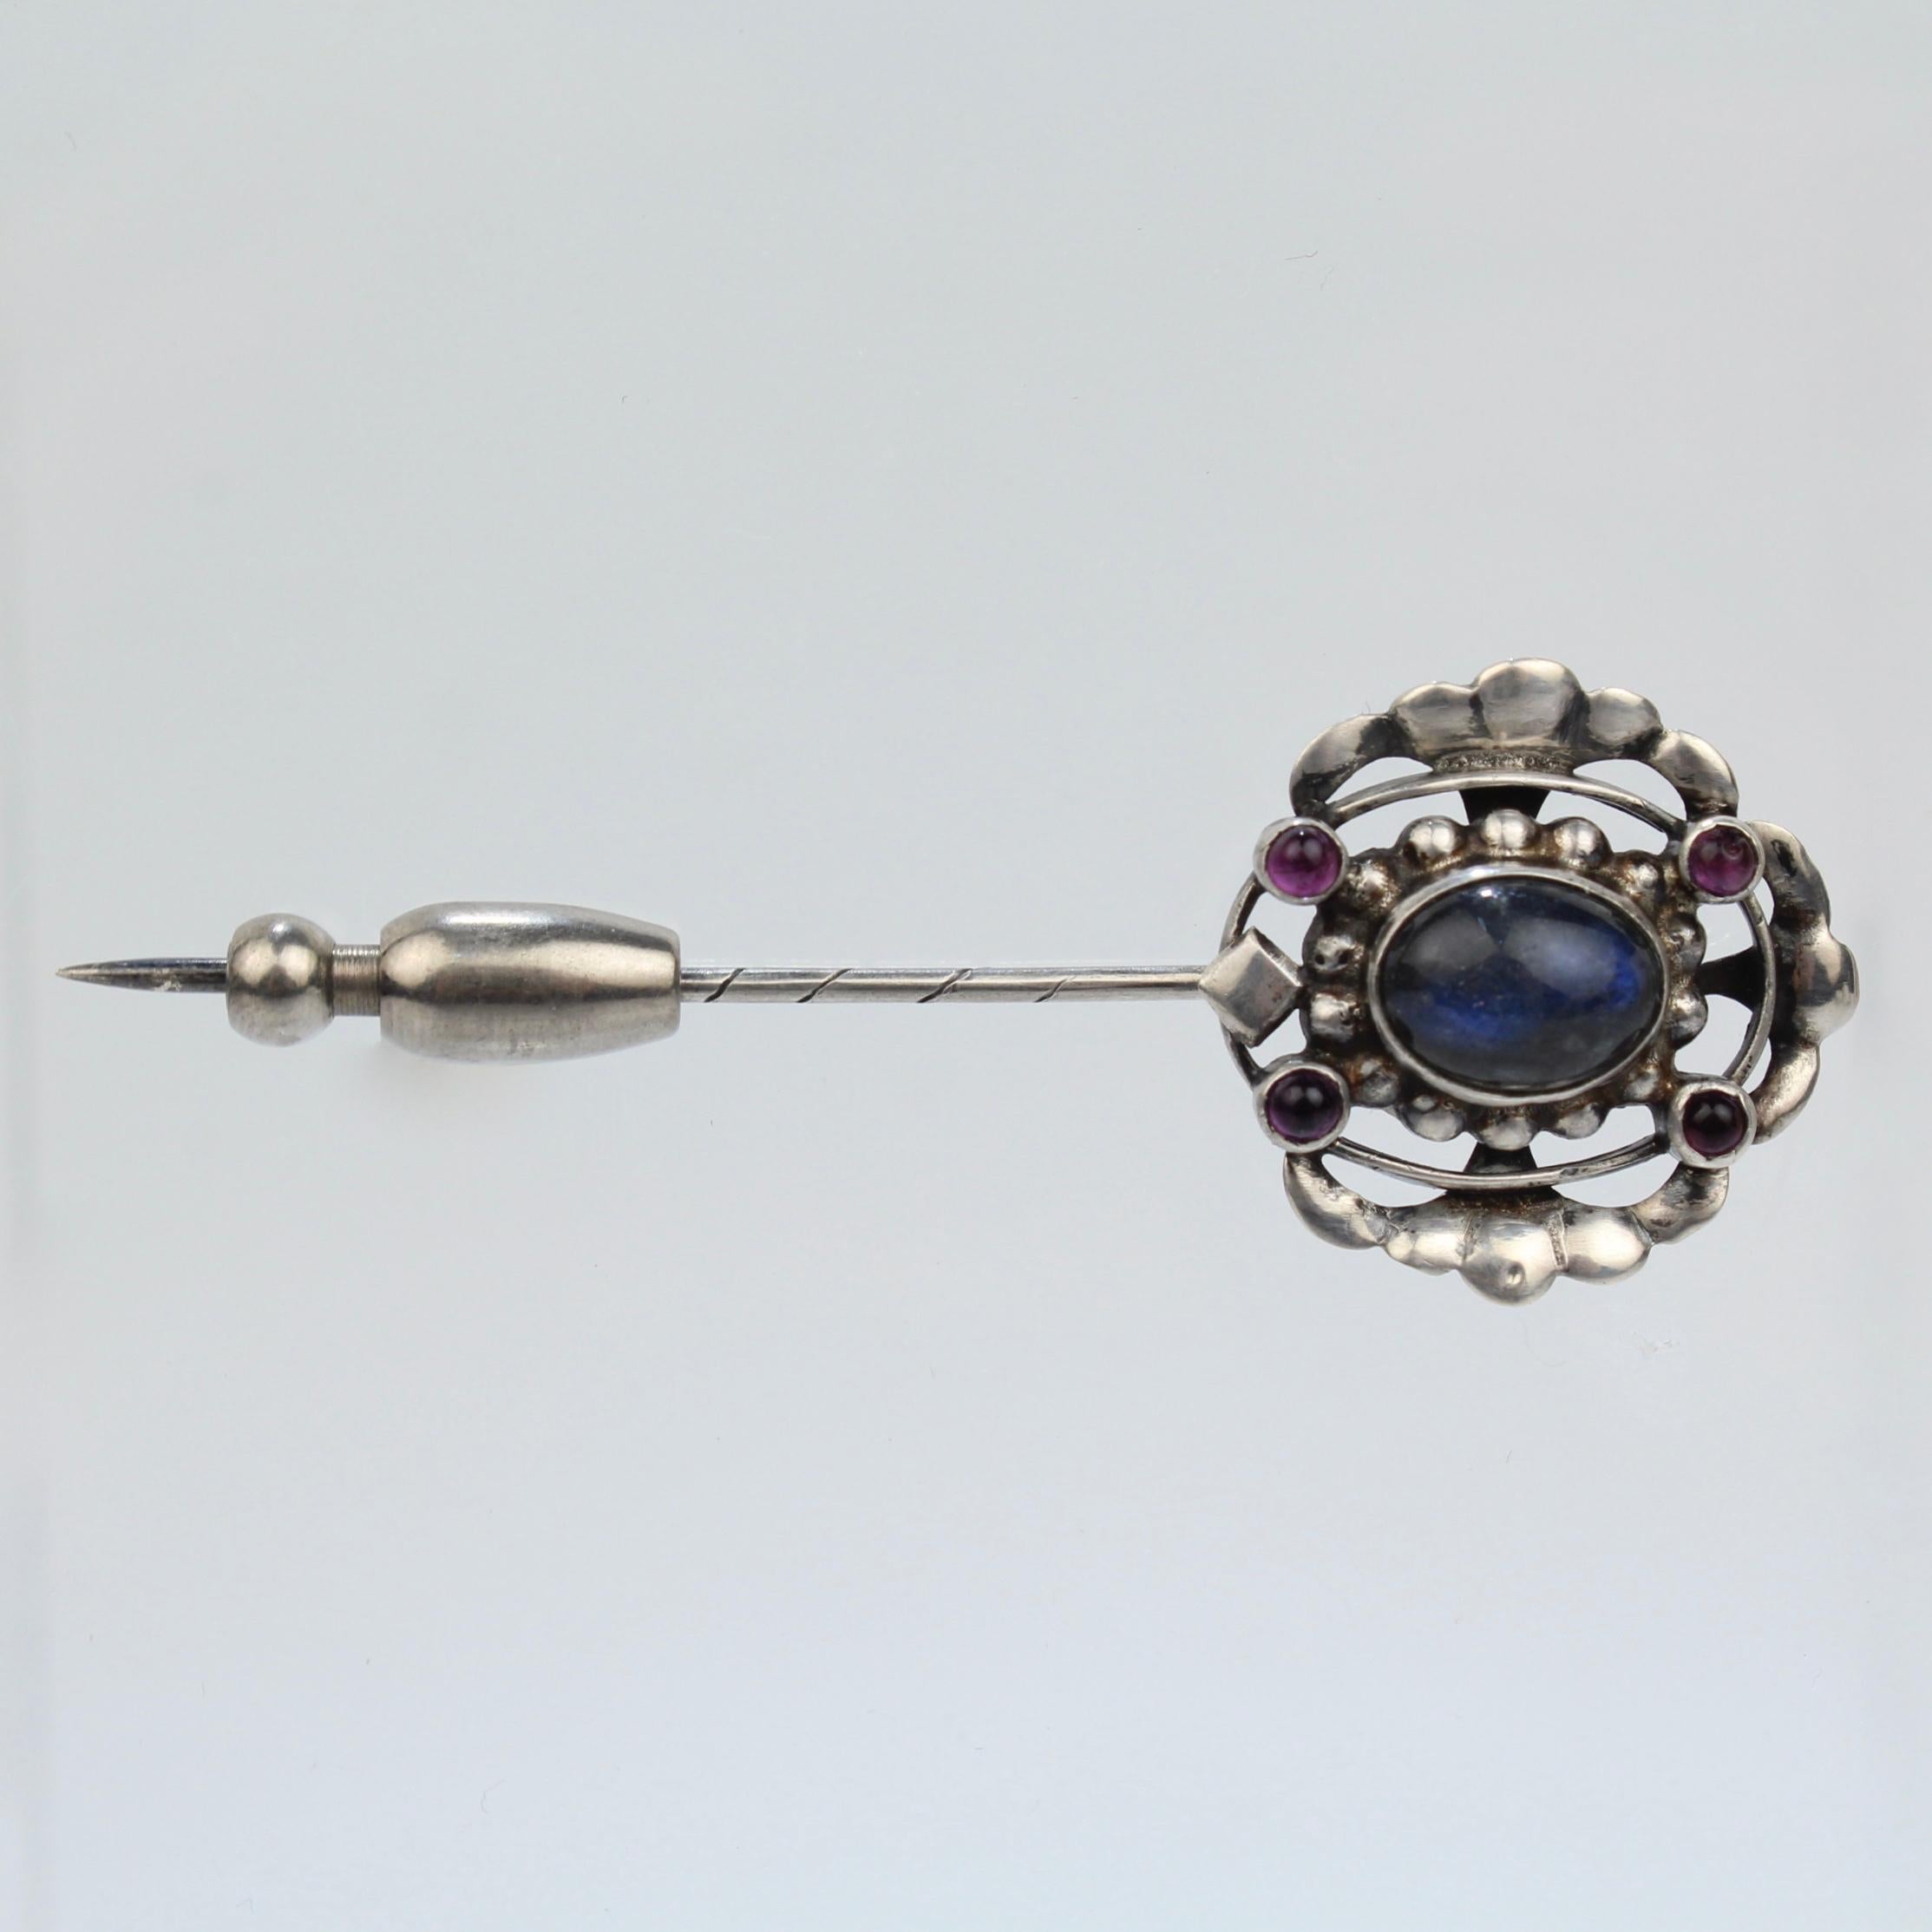 Women's Art Deco Georg Jensen 830 Silver Stick Pin No. 17 with Labradorite and Amethysts